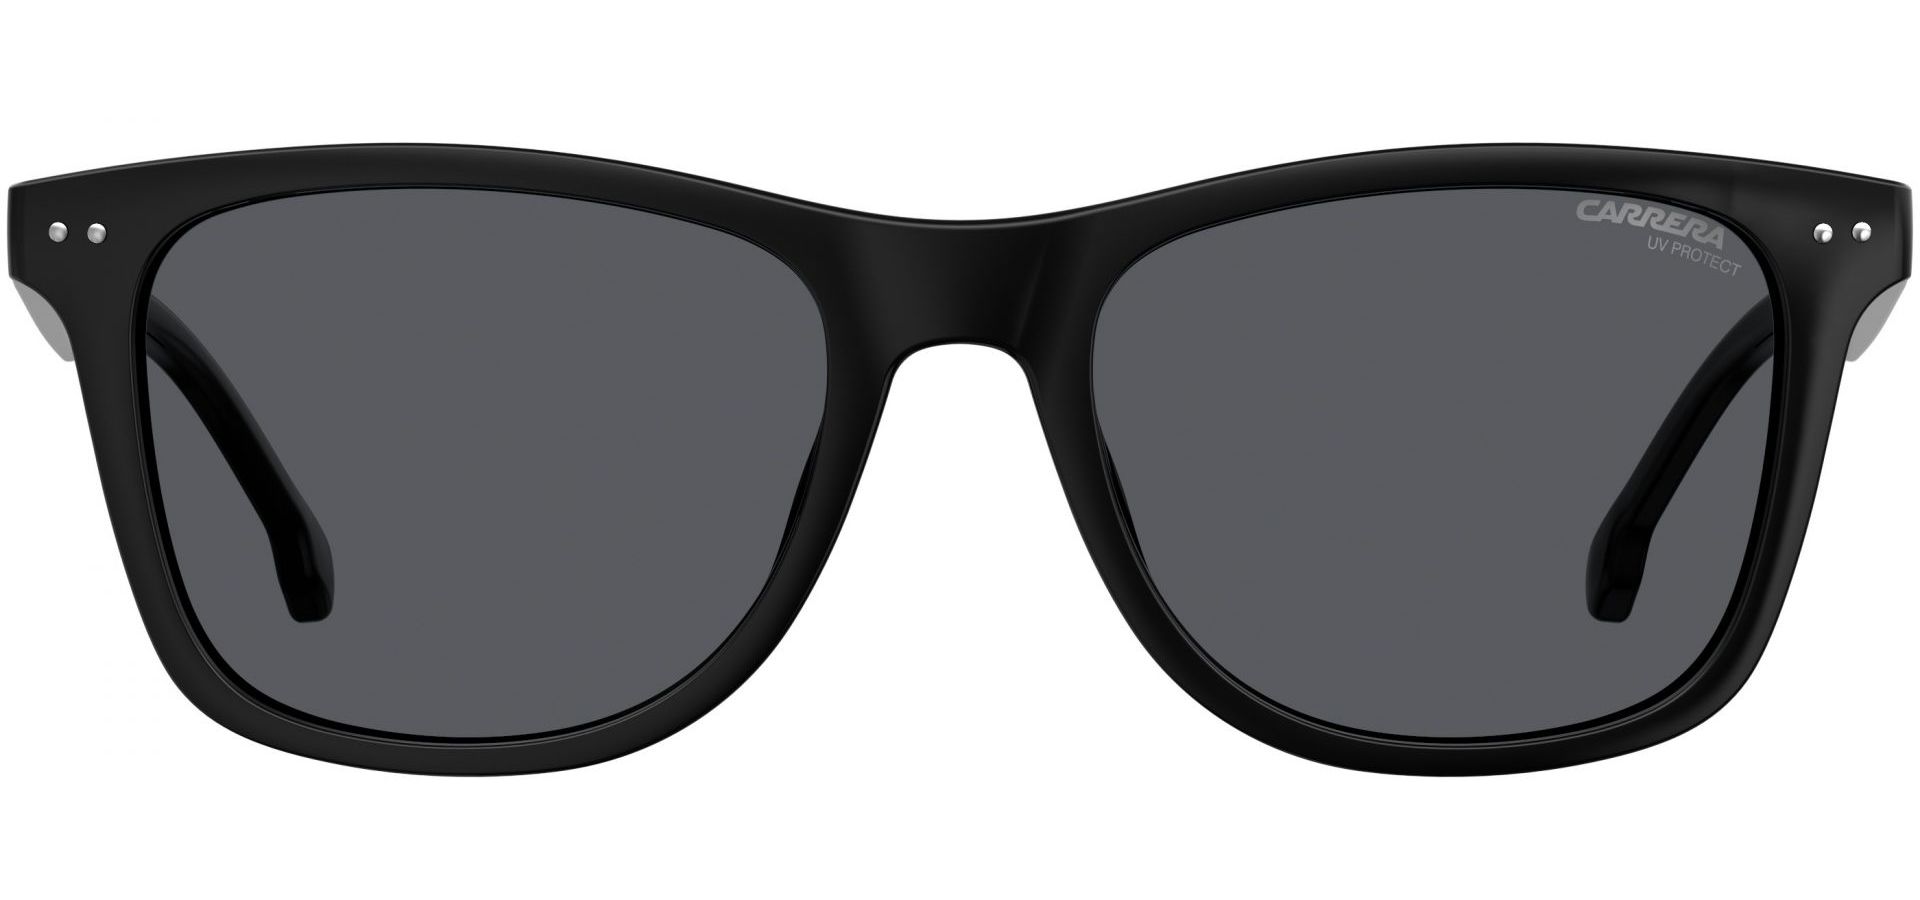 Sunčane naočale Carrera CARRERA 2022: Boja: Black, Veličina: 53-19-145, Spol: muške, Materijal: acetat